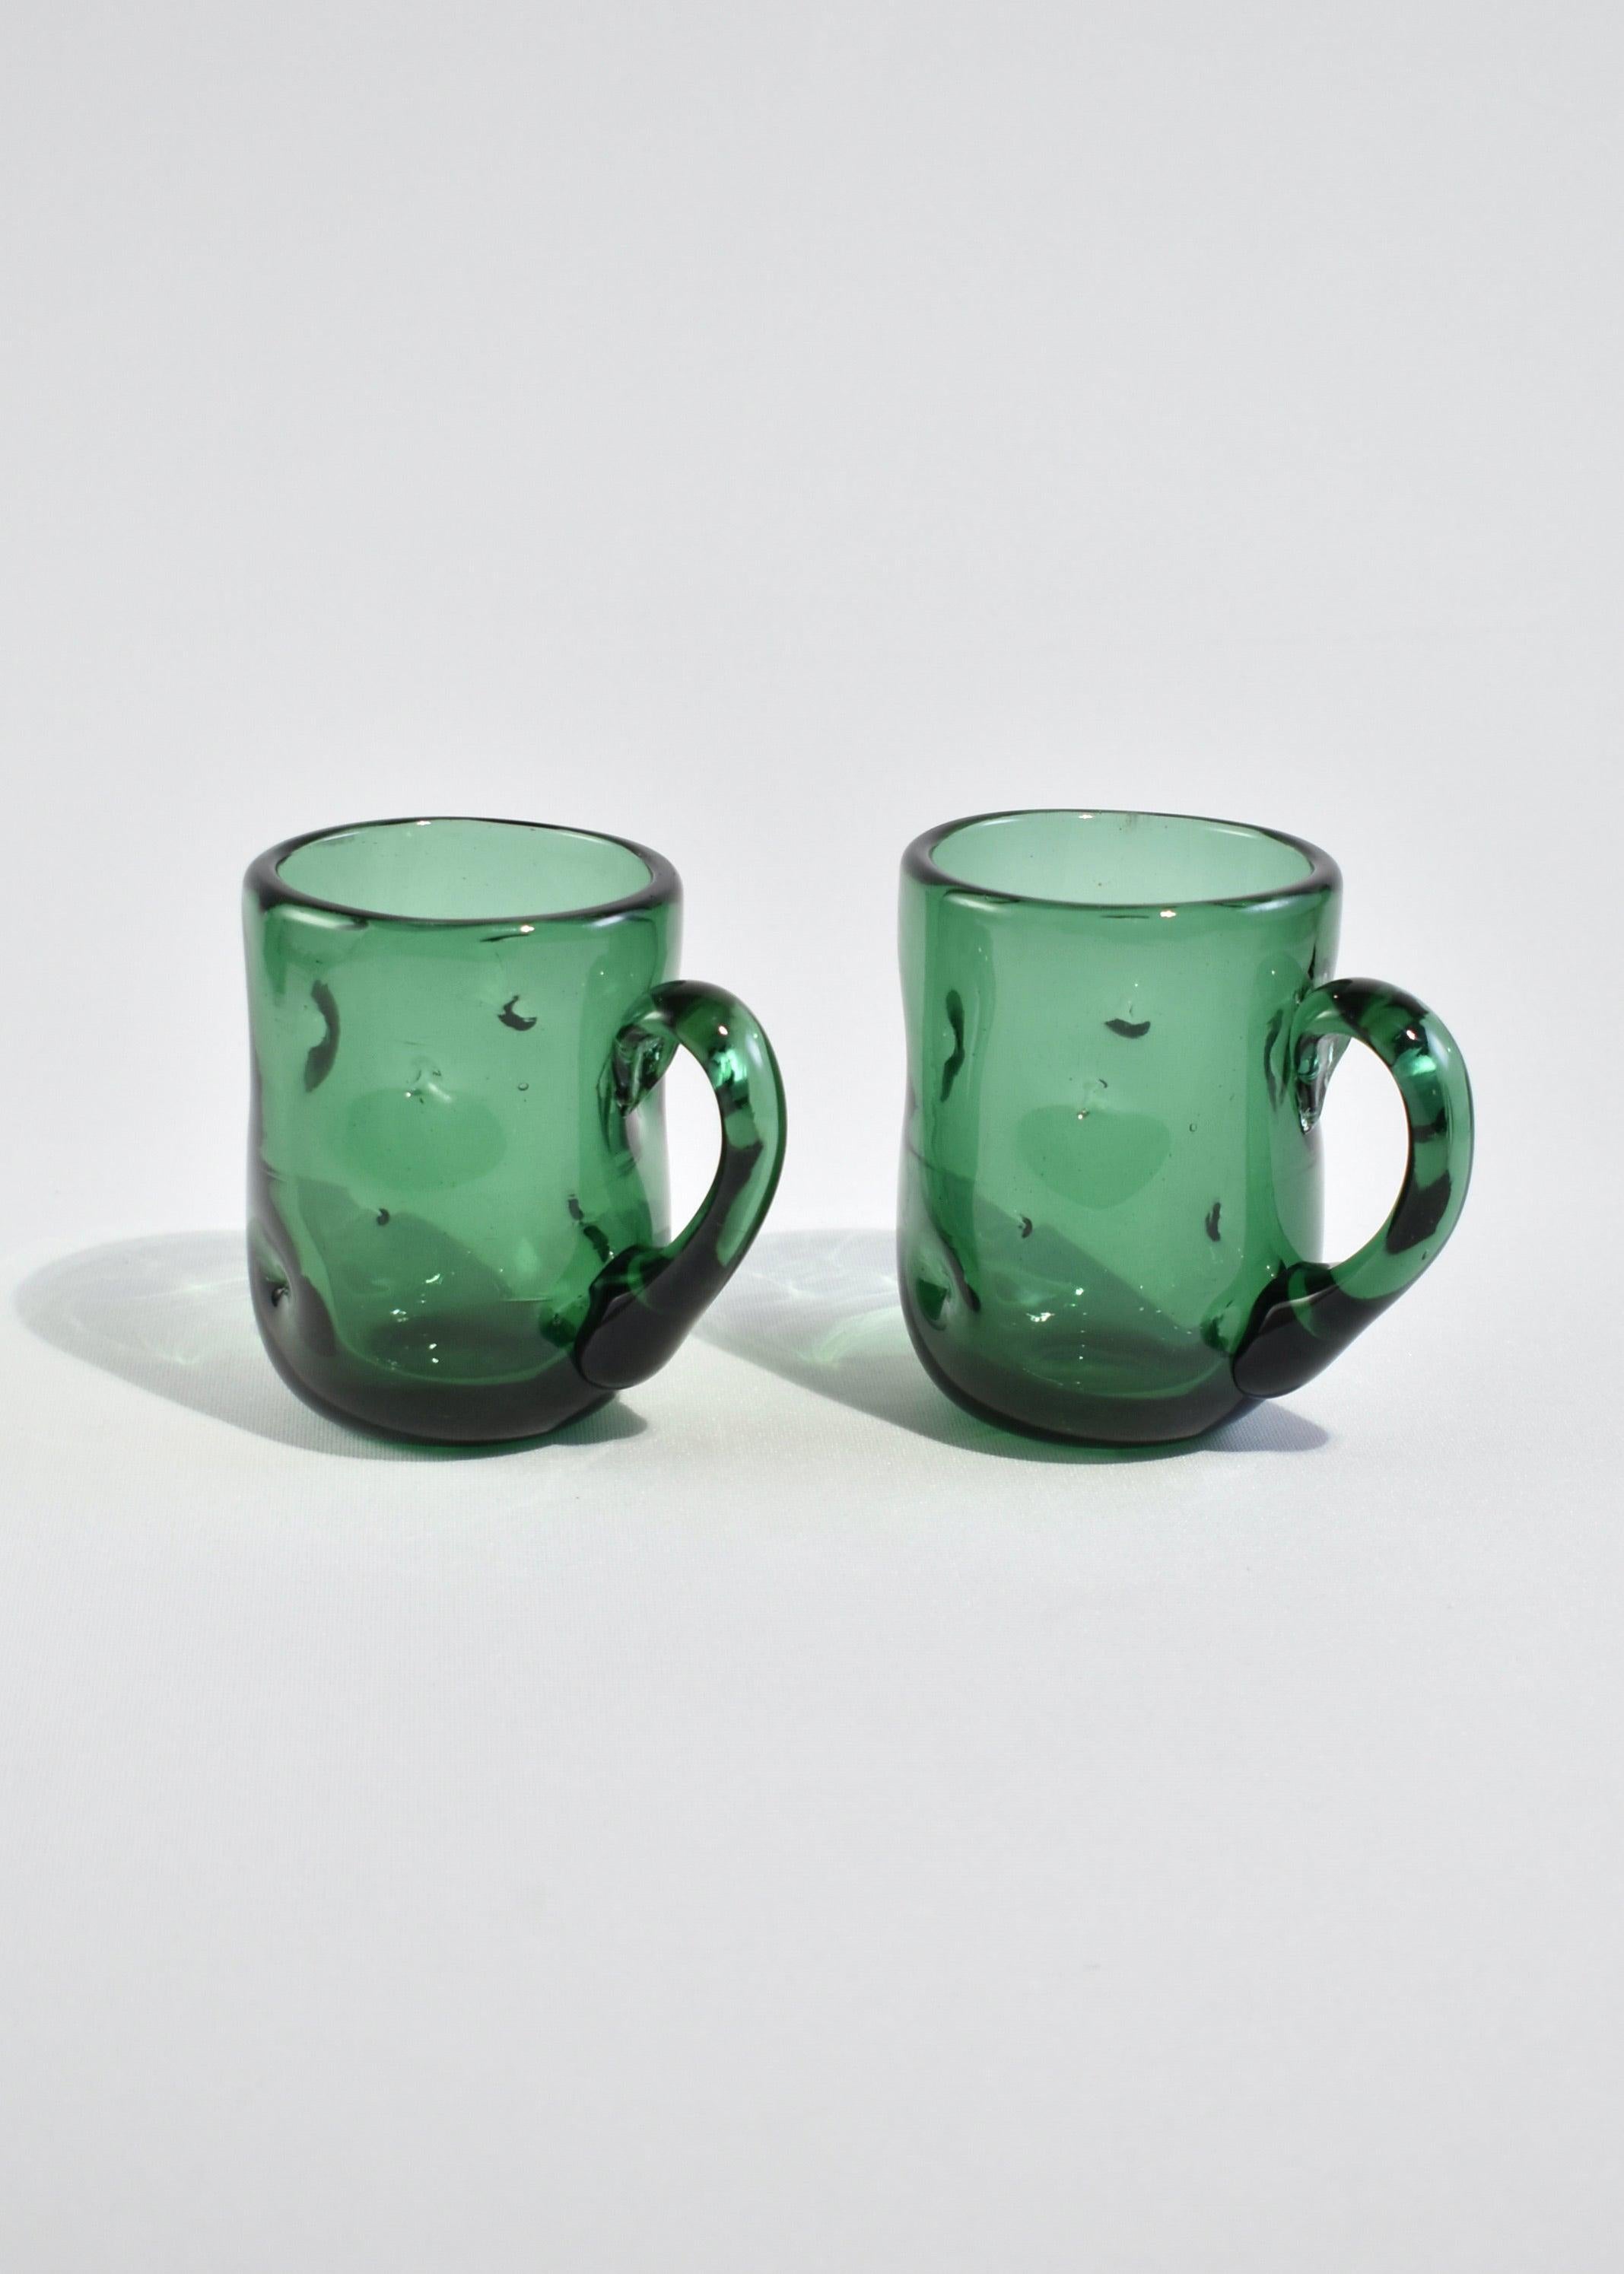 Vintage handblown organic shaped glass mug set in emerald green. Made by Blenko.